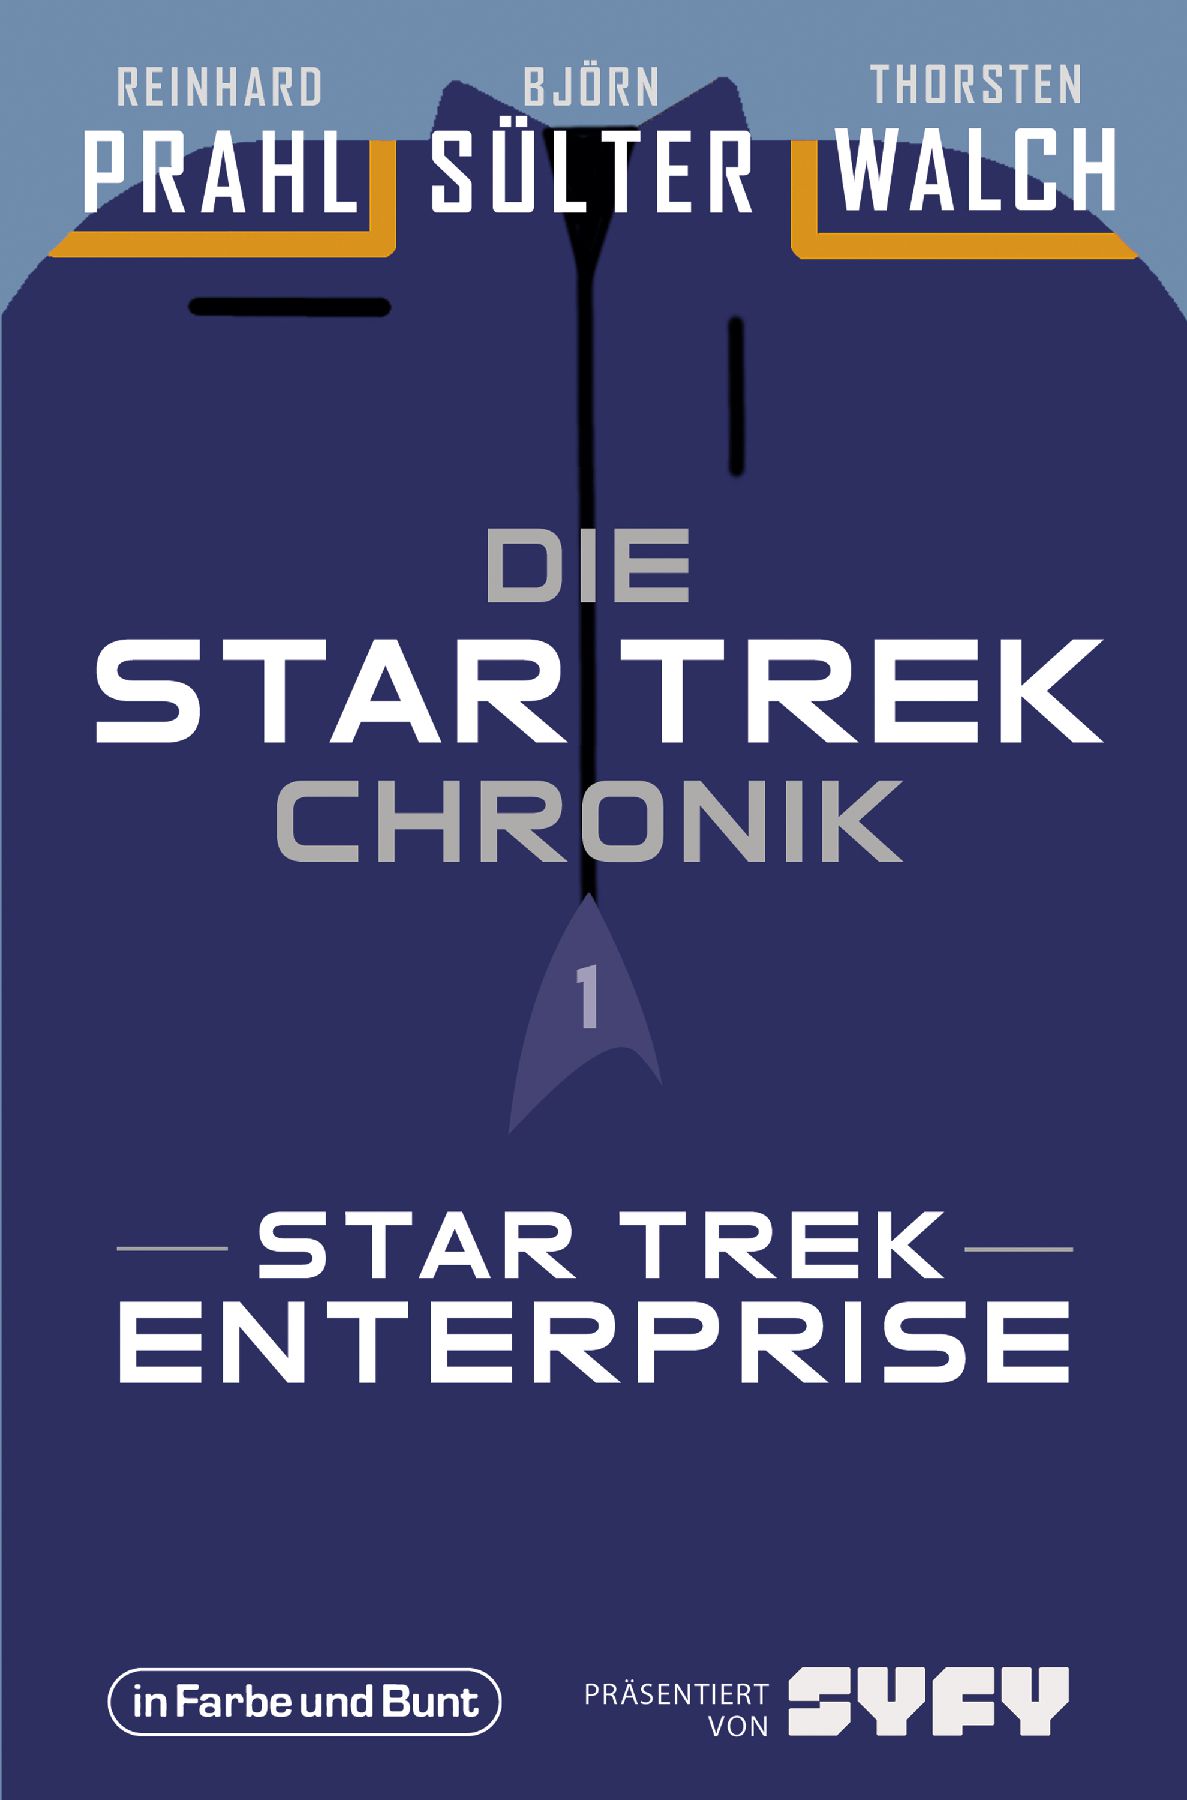 Die Star-Trek-Chronik